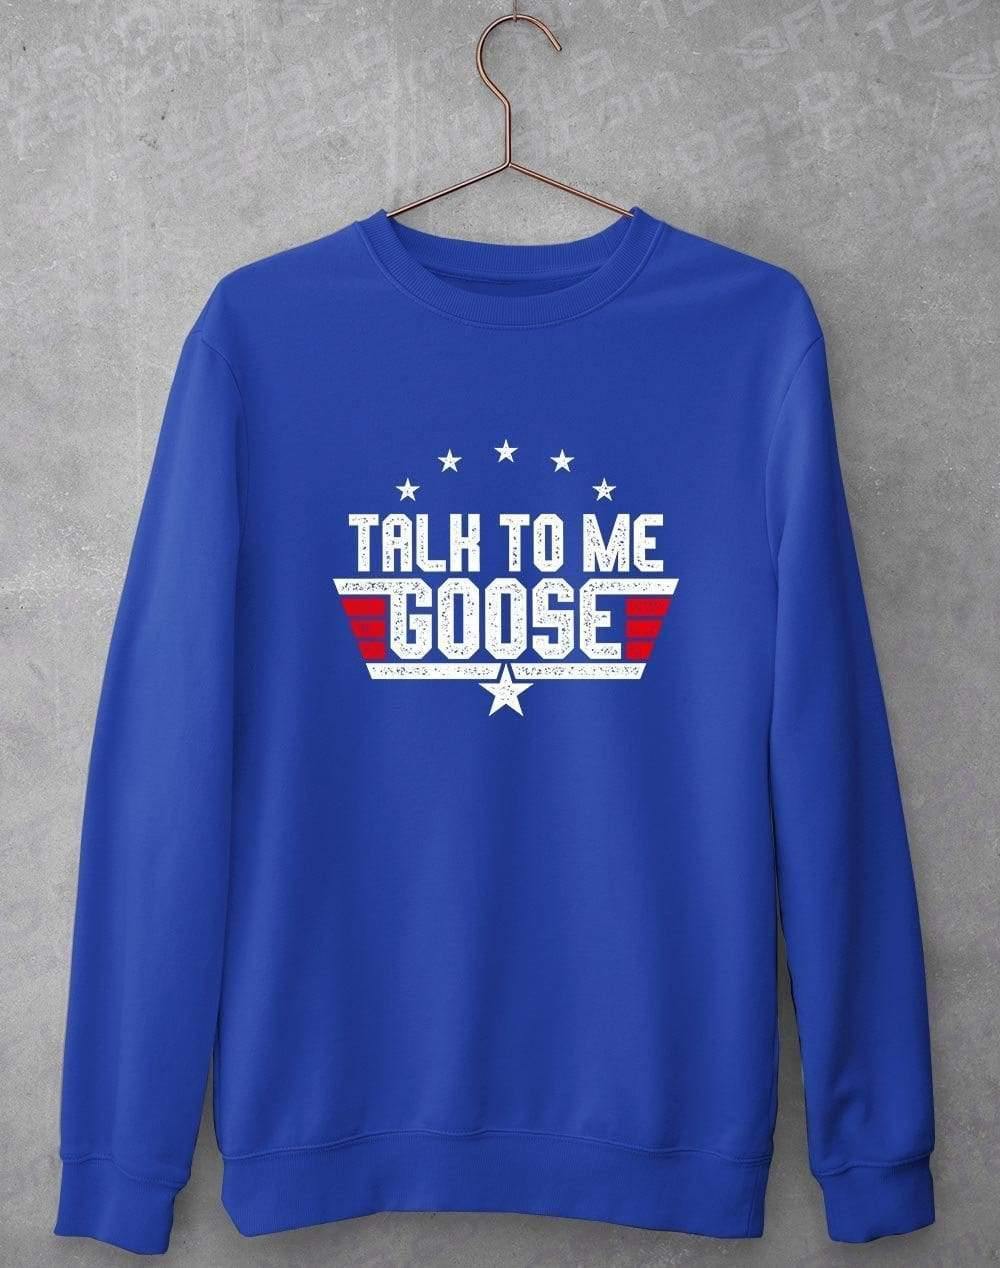 Talk to me Goose Sweatshirt S / Royal Blue  - Off World Tees